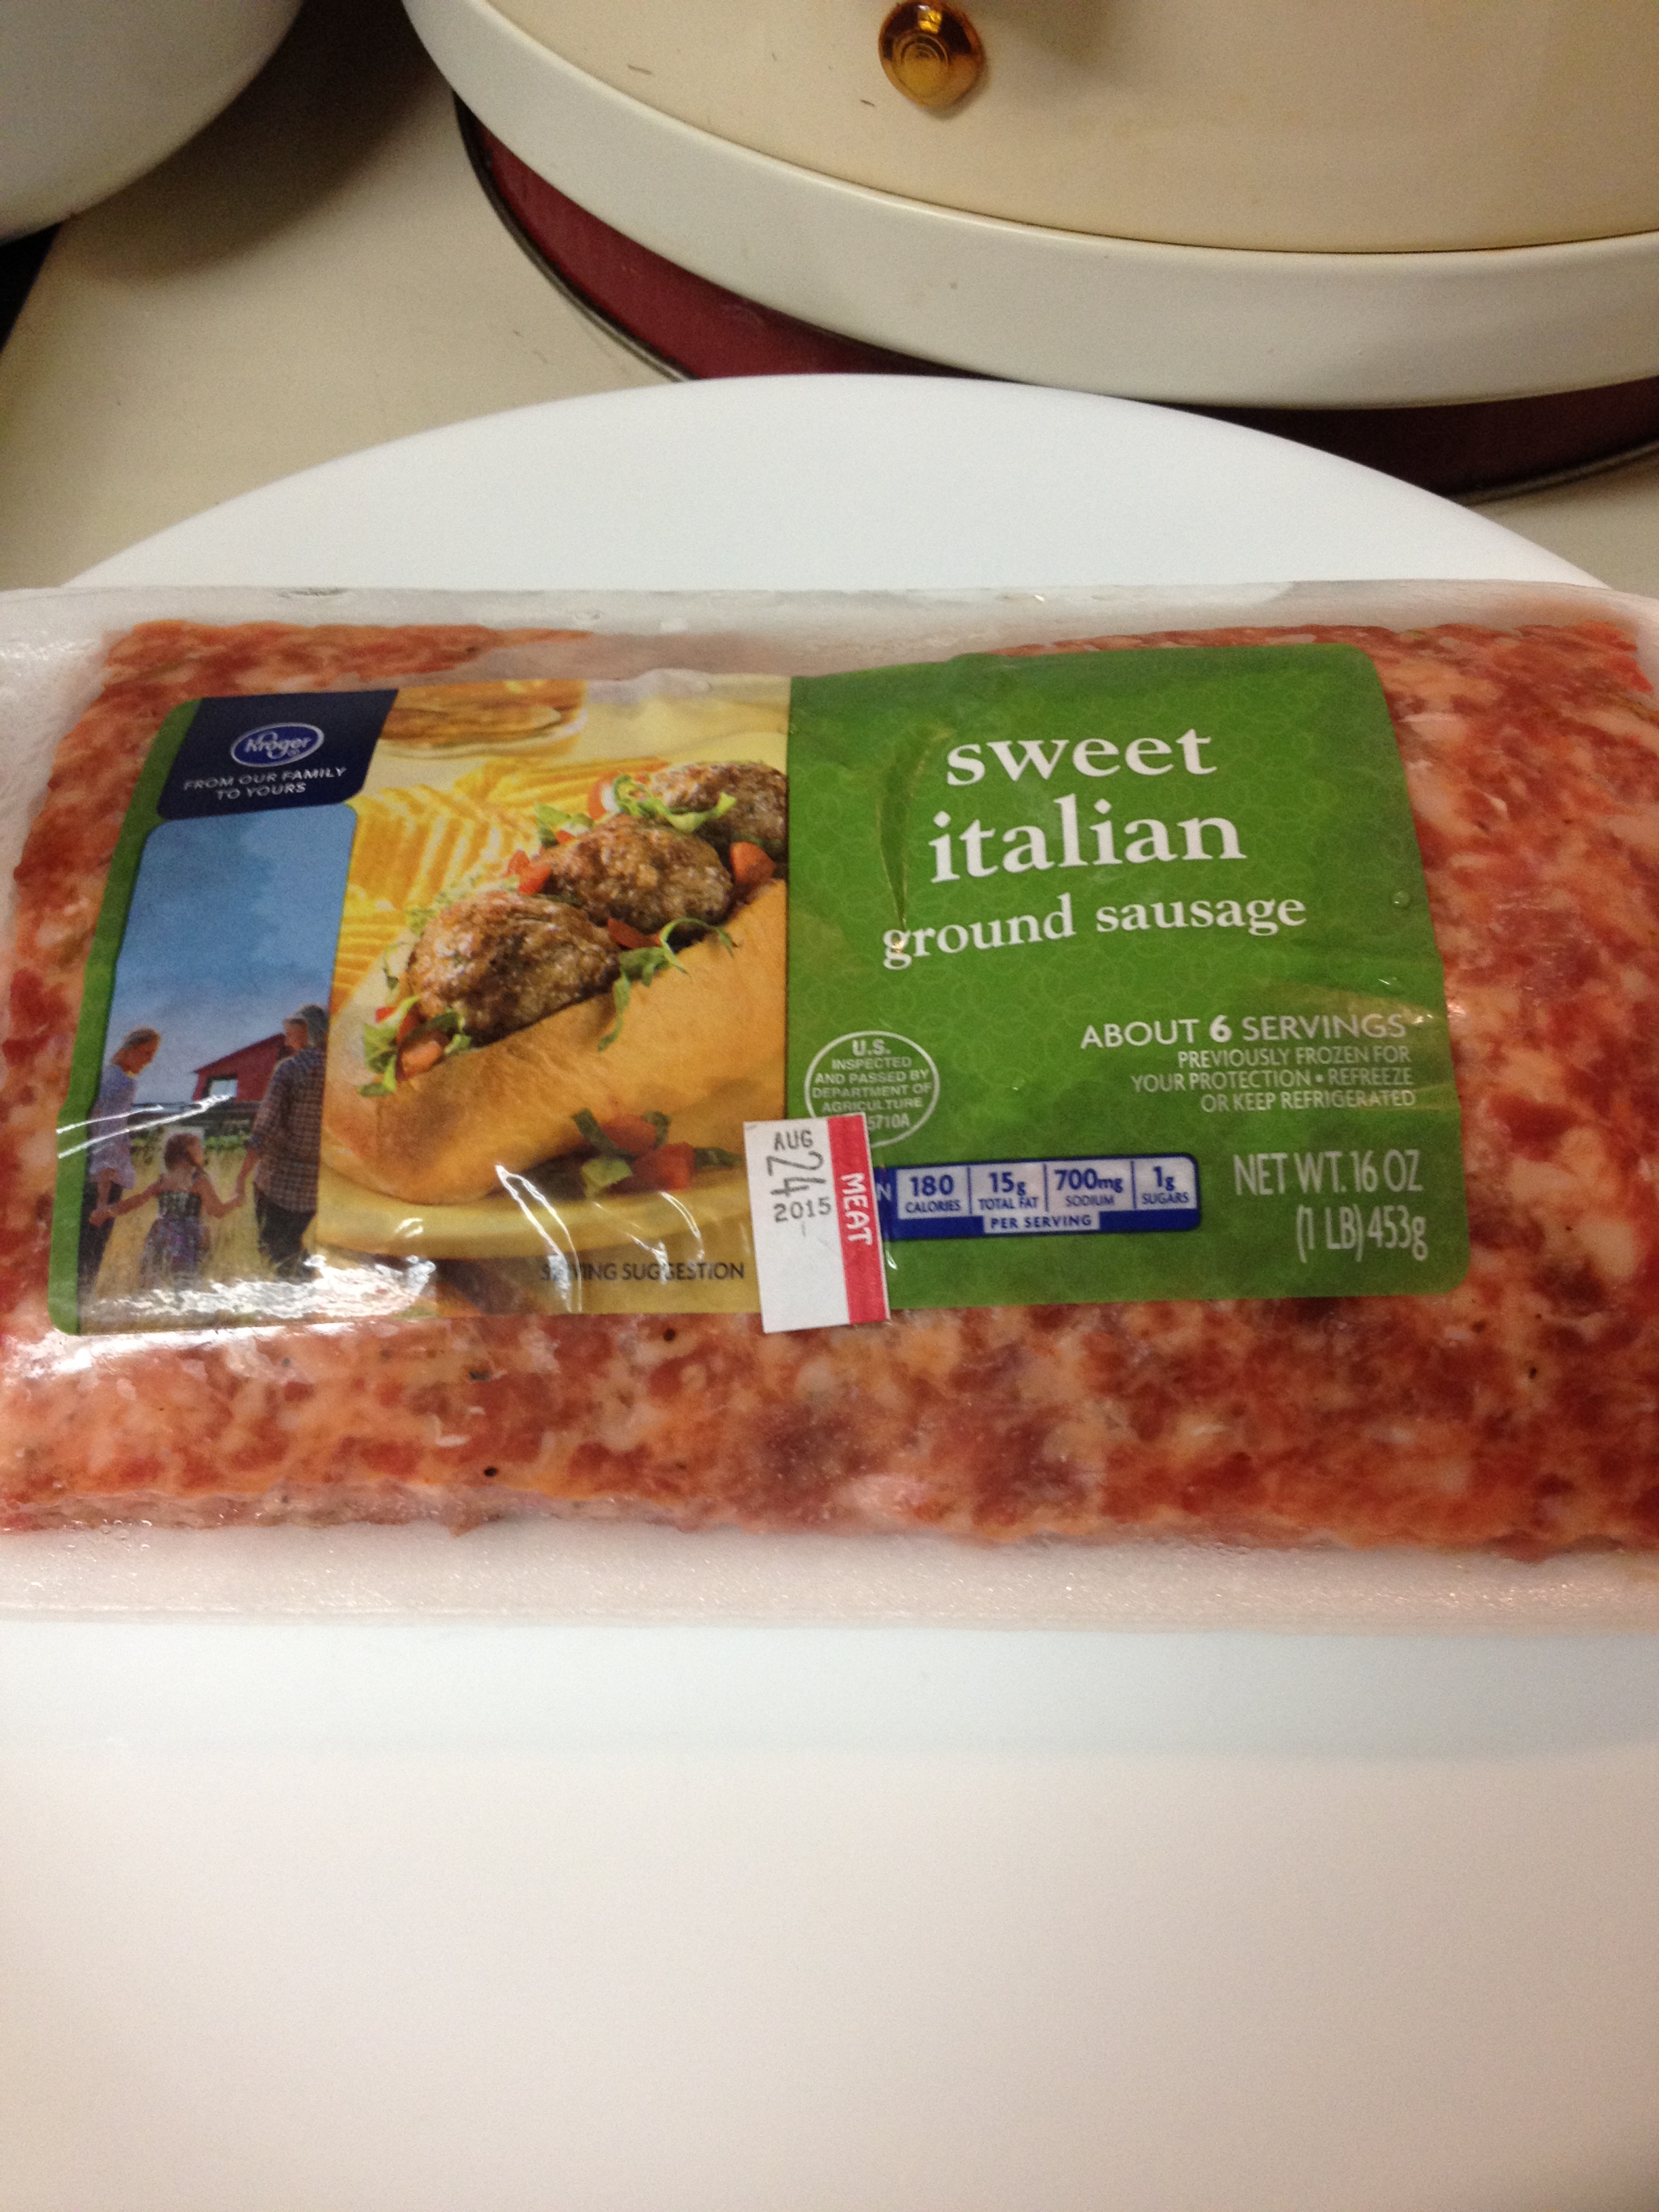 Just plain old Italian sausage. 